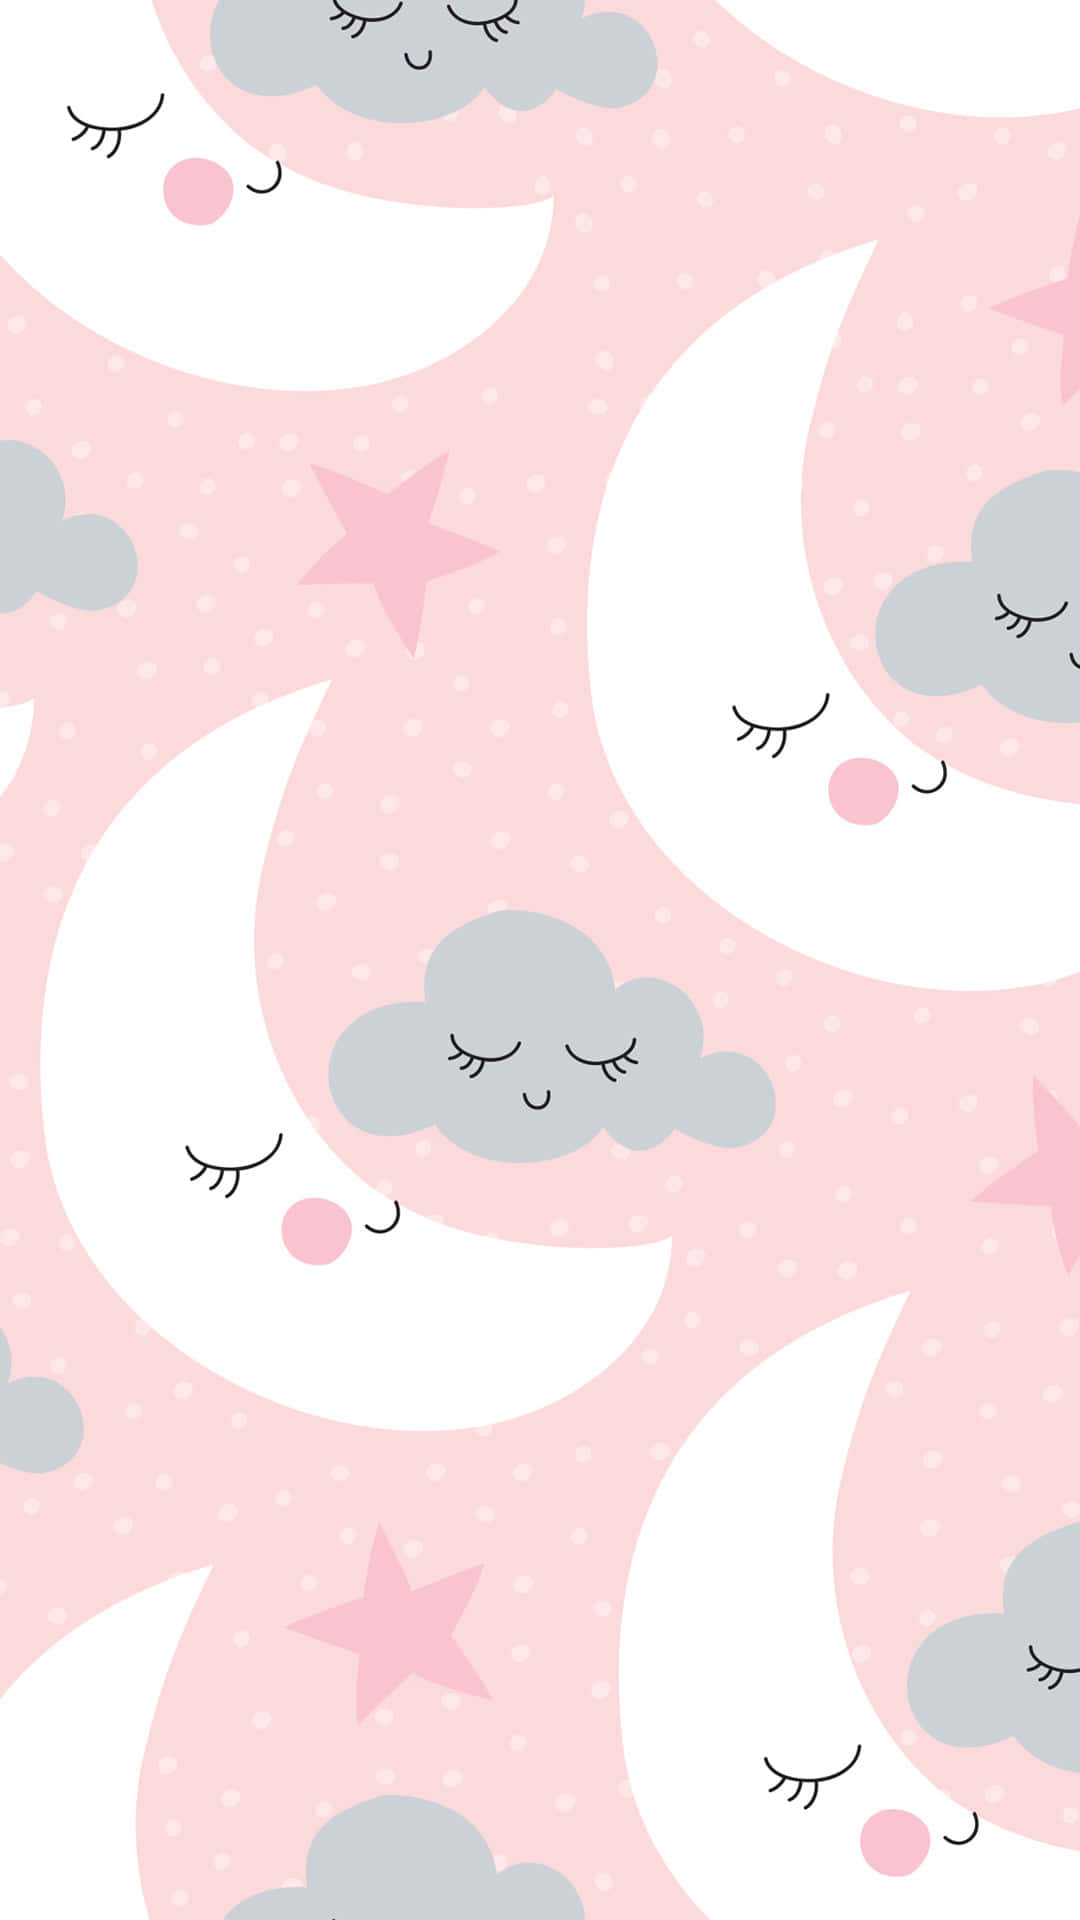 Free Cute Girly Phone Wallpaper Downloads, [100+] Cute Girly Phone  Wallpapers for FREE 